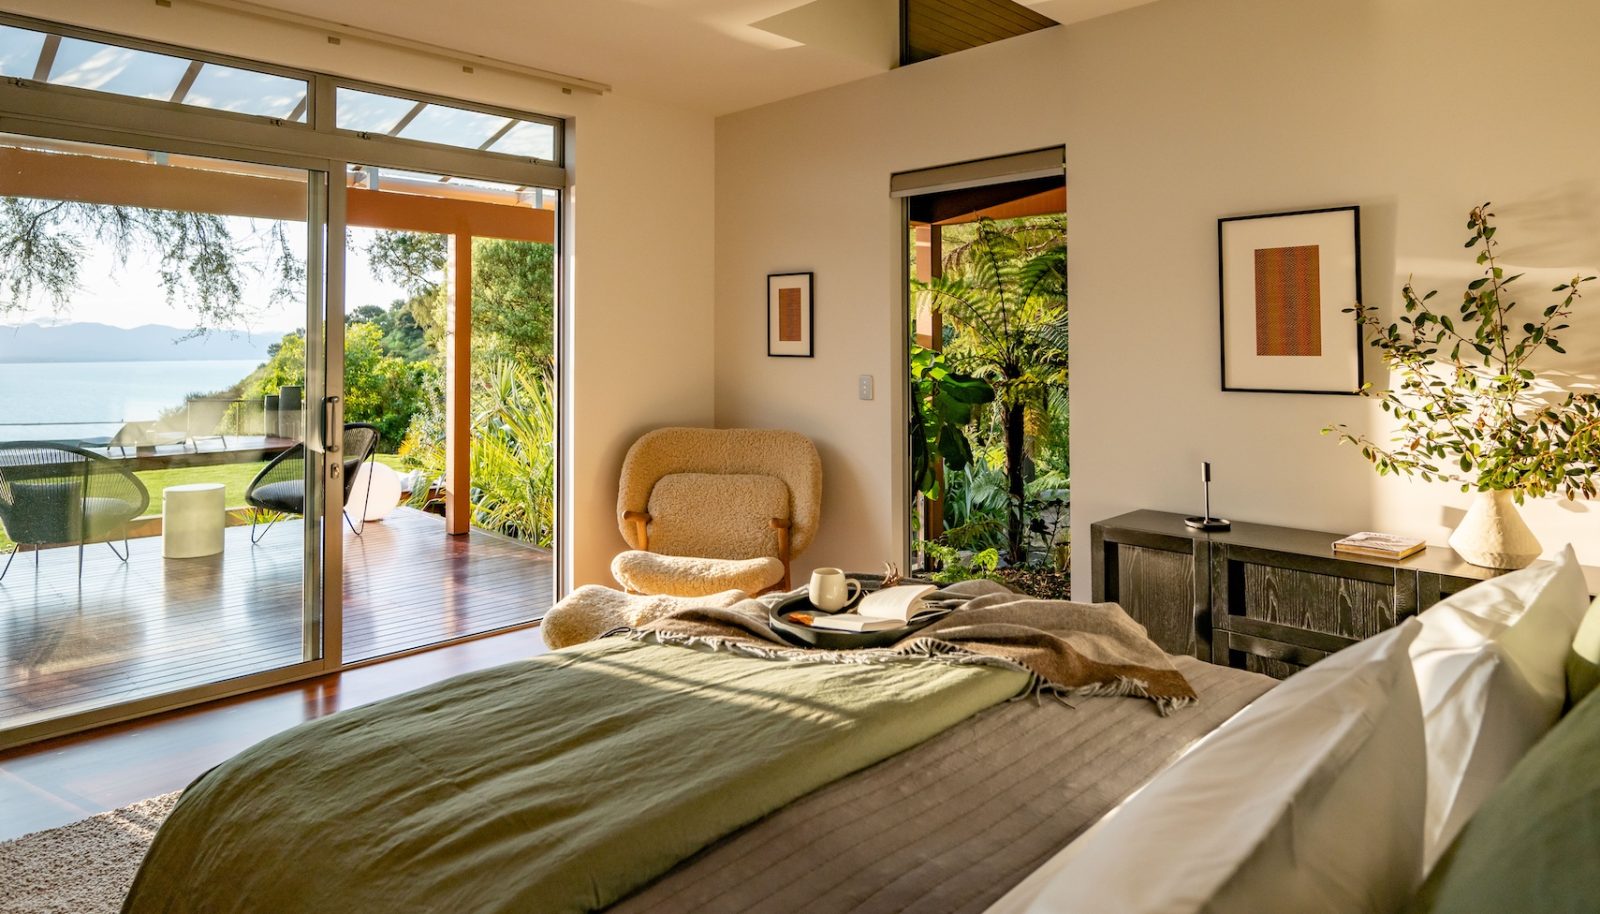 Okoro Villa private villa accommodation near Nelson New Zealand - bedroom